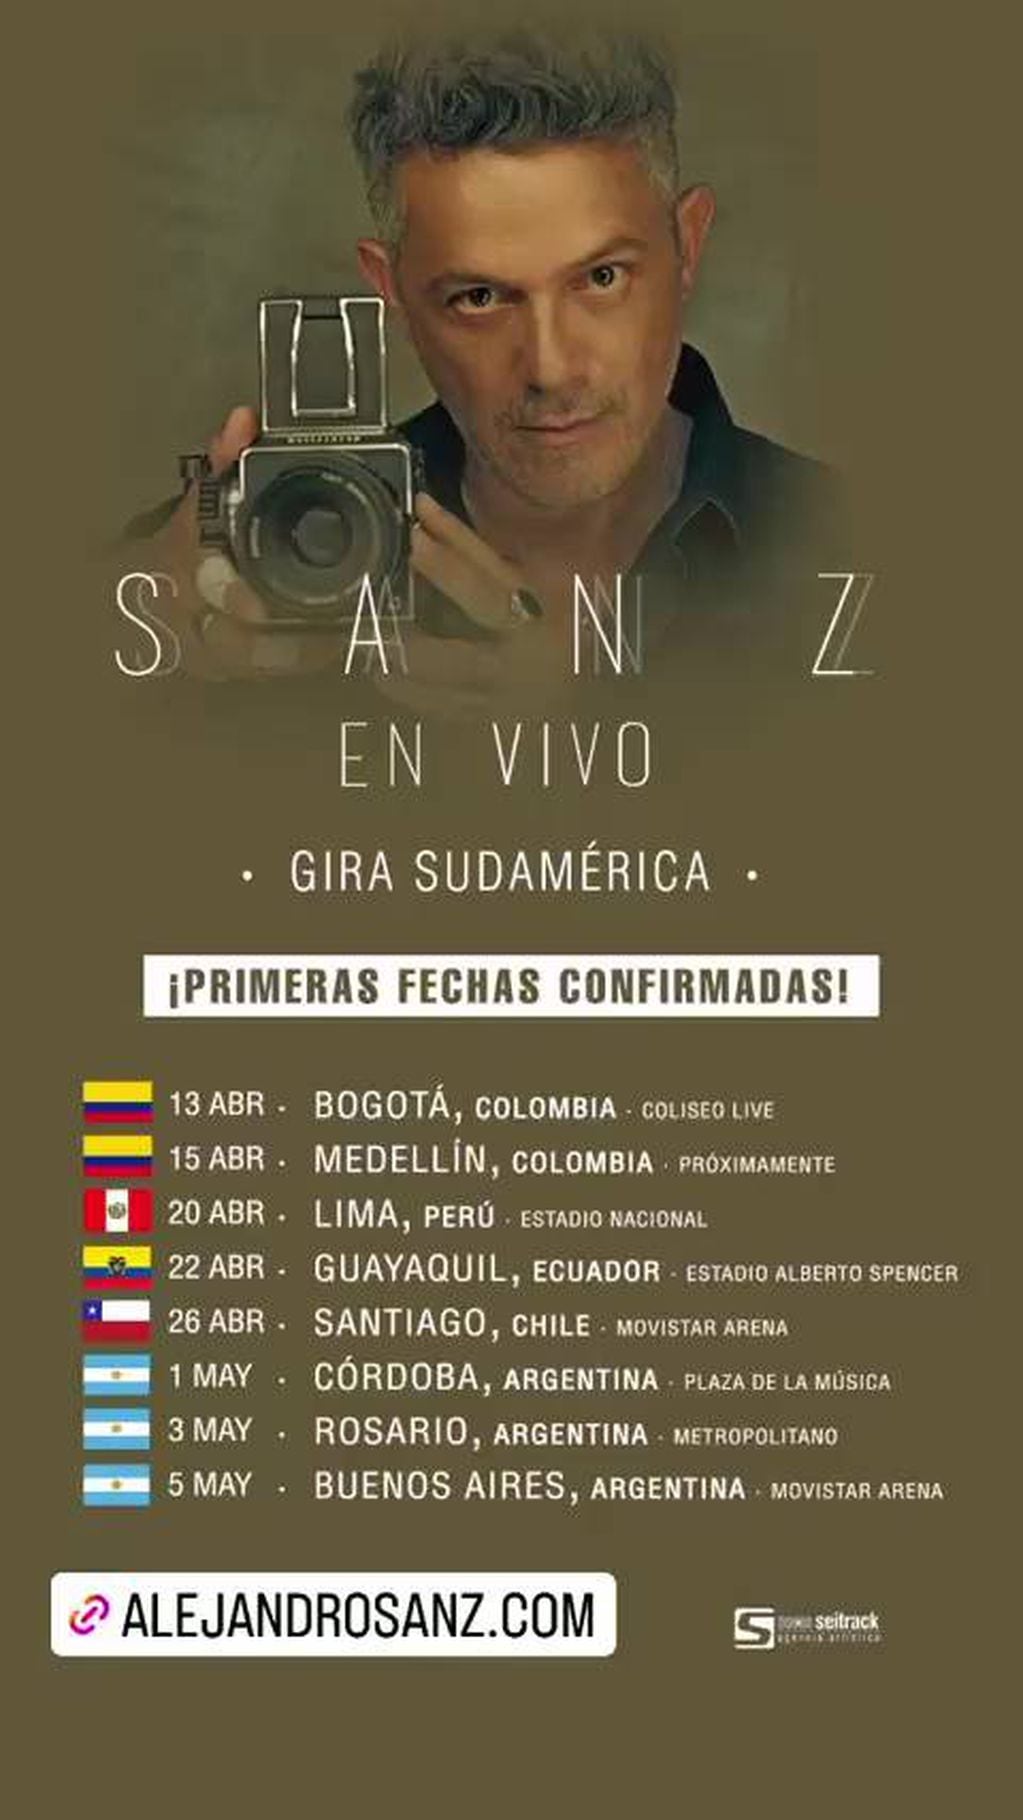 Alejandro Sanz anunció una gira por Sudamérica.